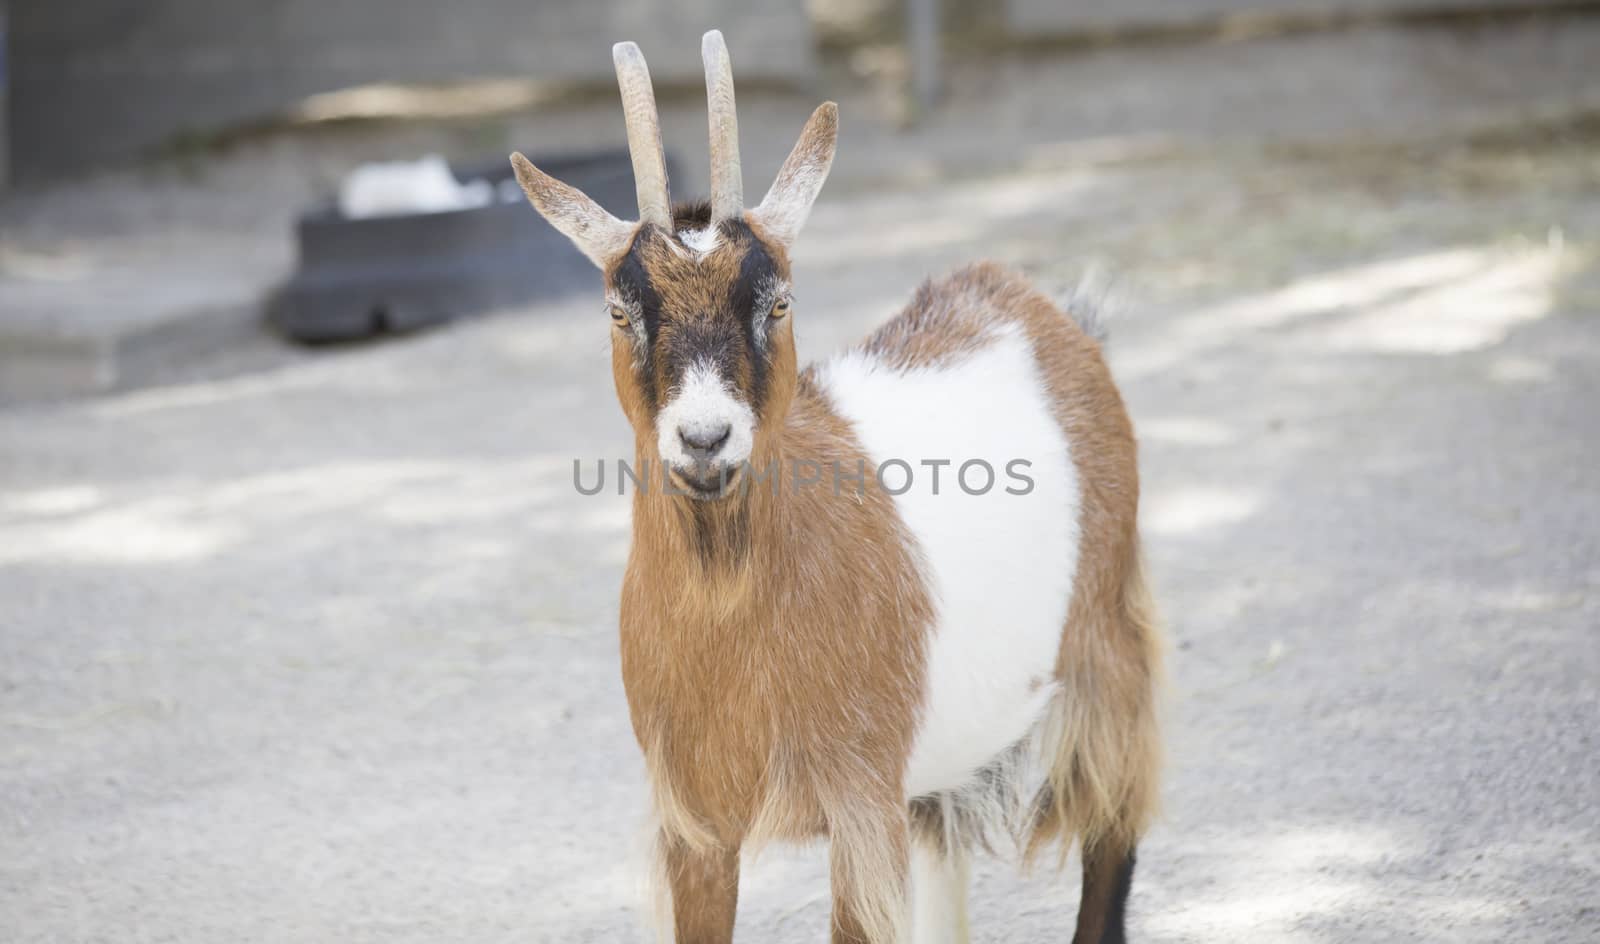 Goat by tornado98